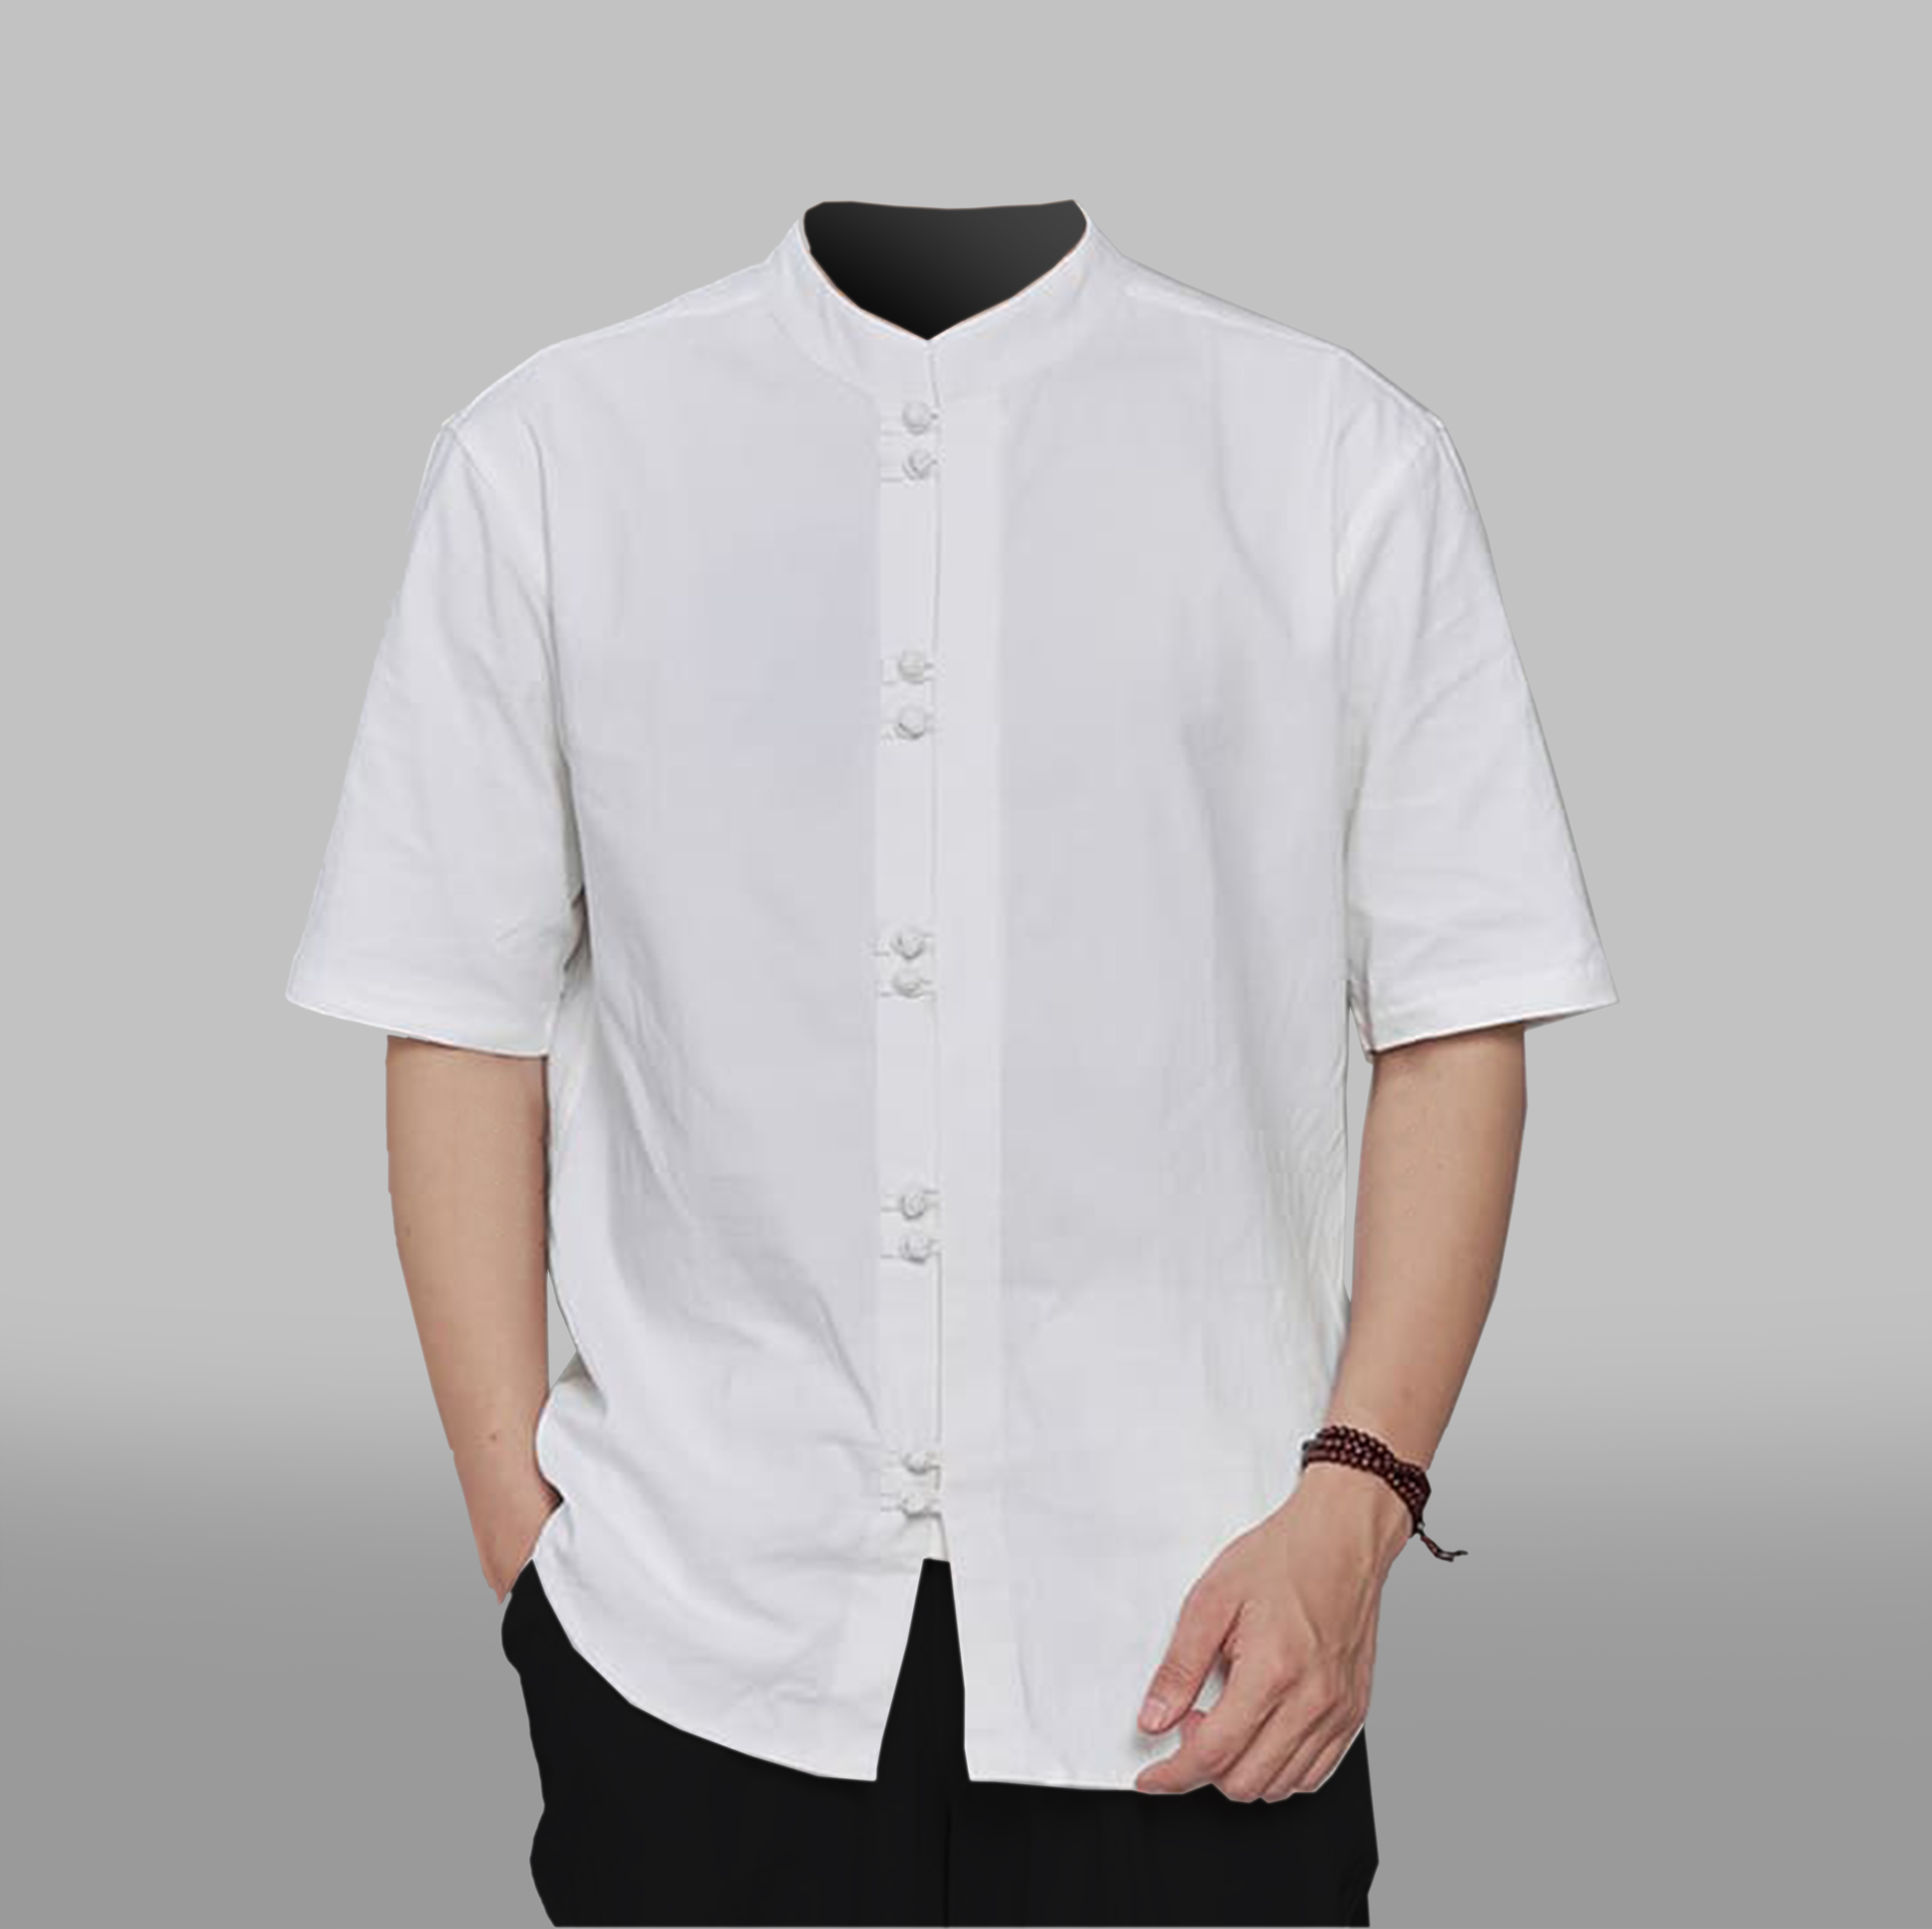 Men's short-sleeved round neck button-down shirt - A7LHFA